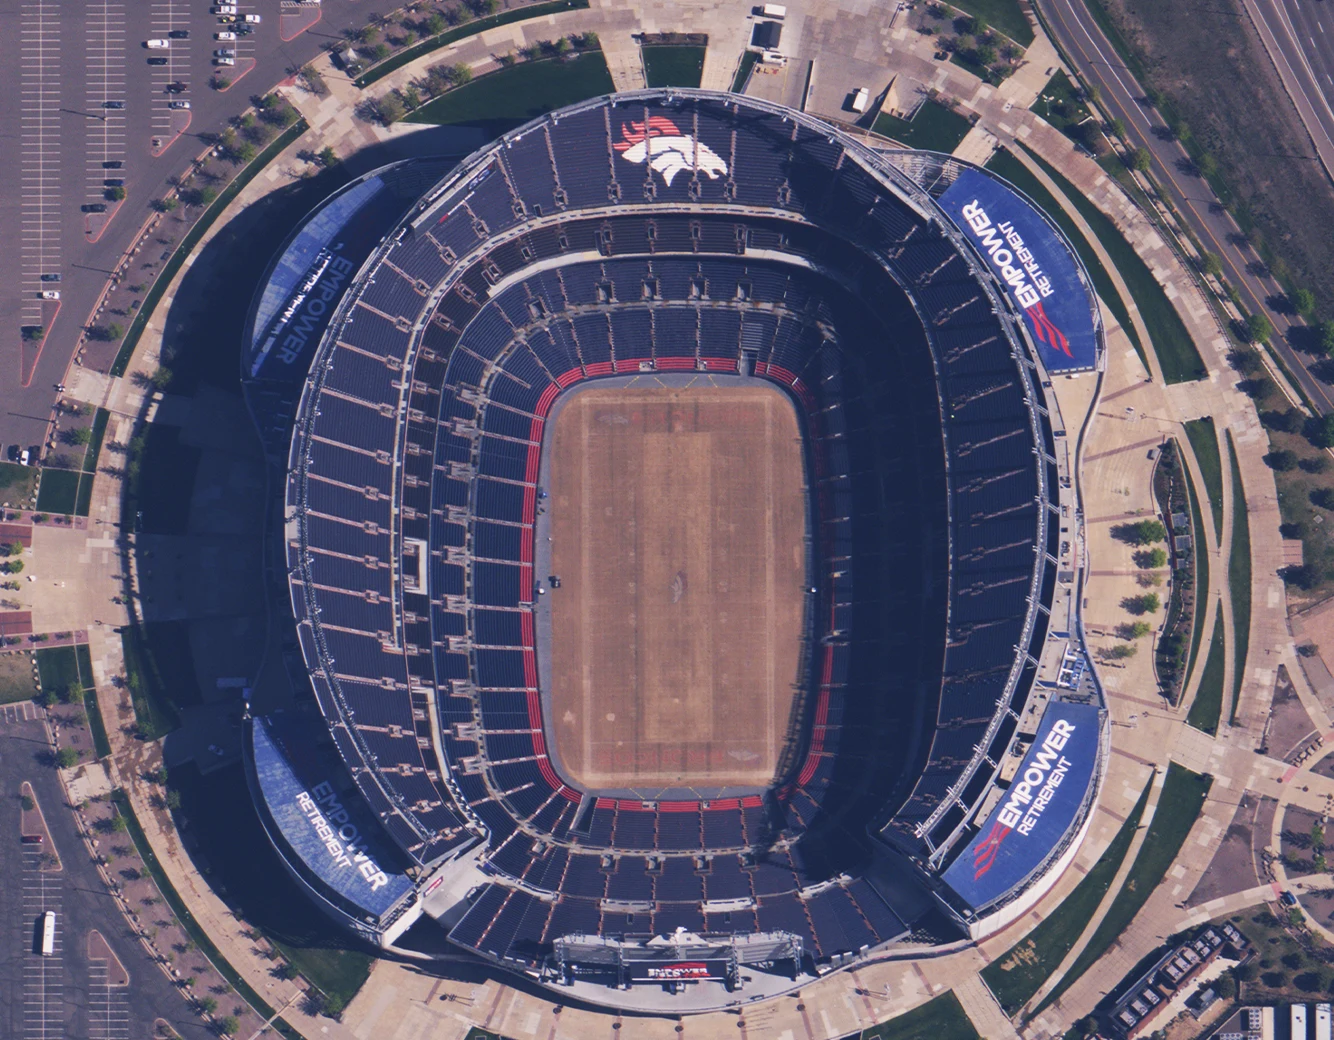 10 cm Image – Denver Bronco's Empower Stadium